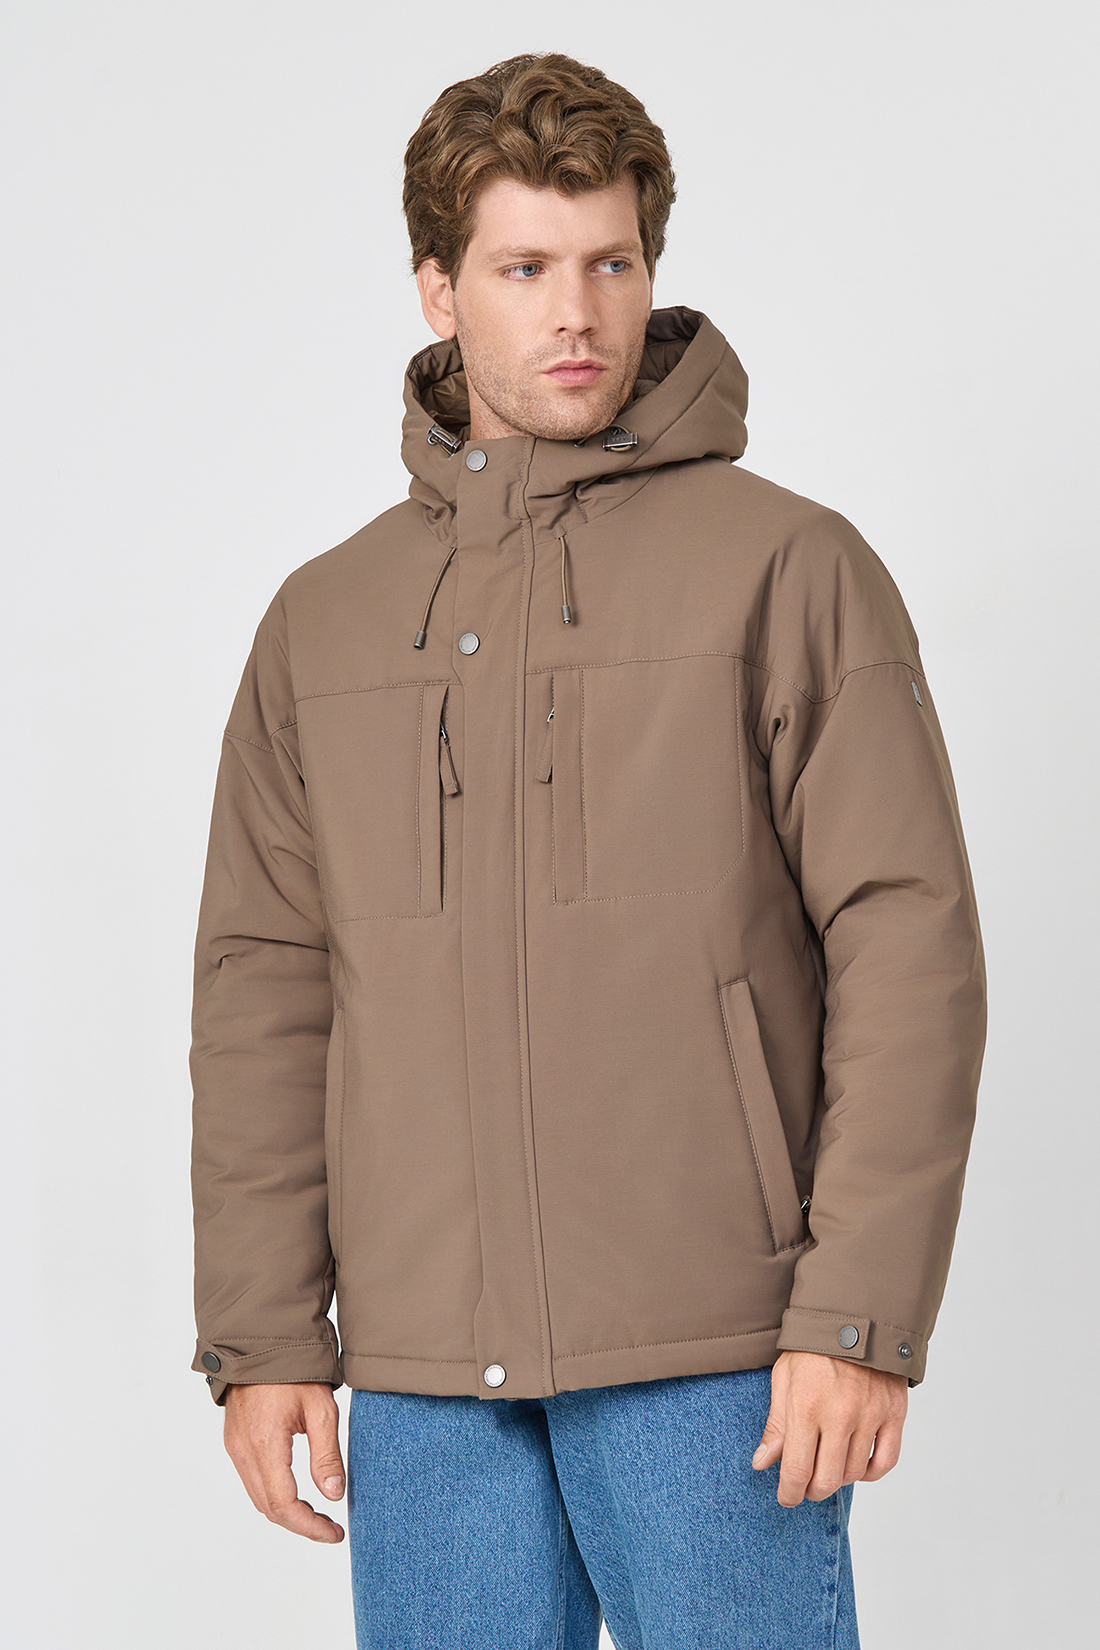 Зимняя куртка мужская Baon B5323503 коричневая S